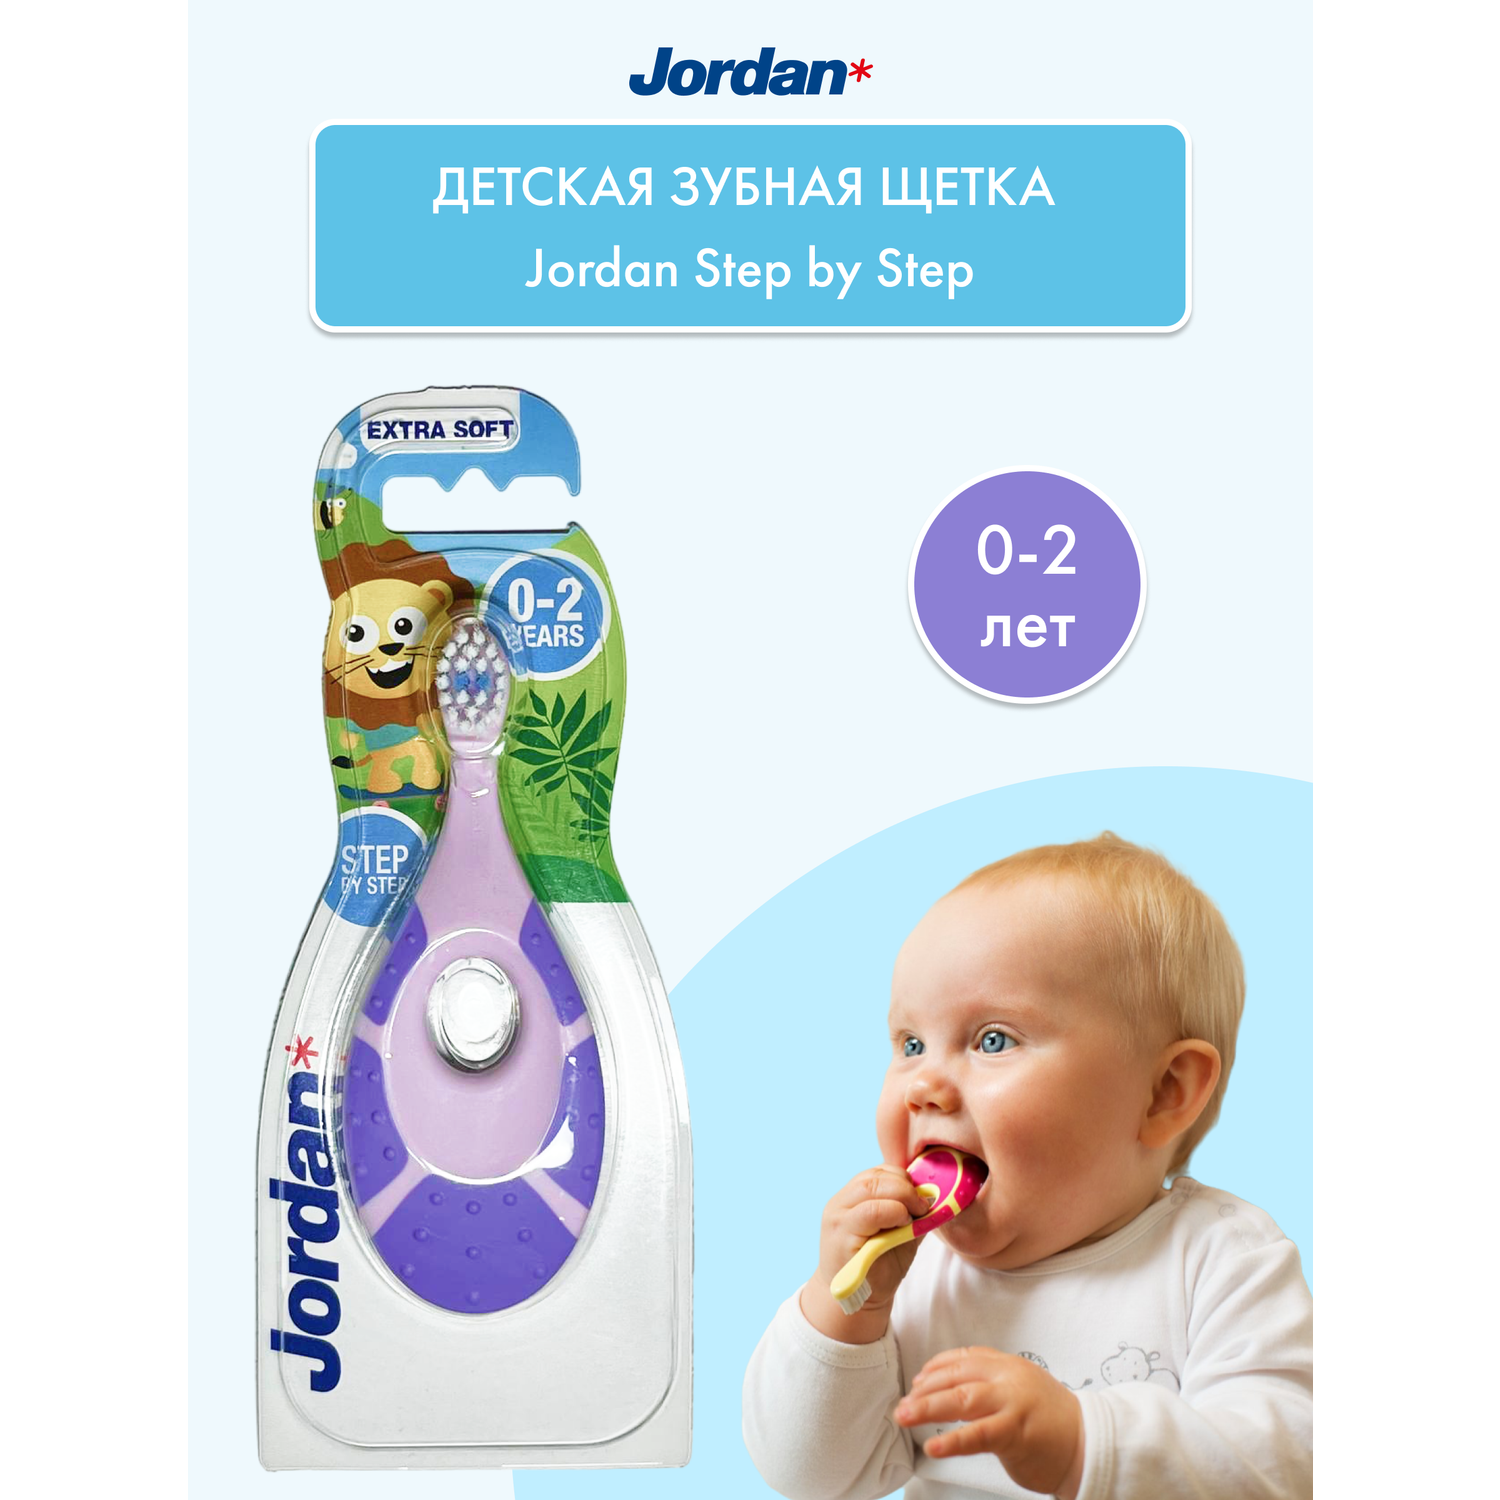 Детская зубная щетка JORDAN Step by Step от 0-2 лет - фото 2